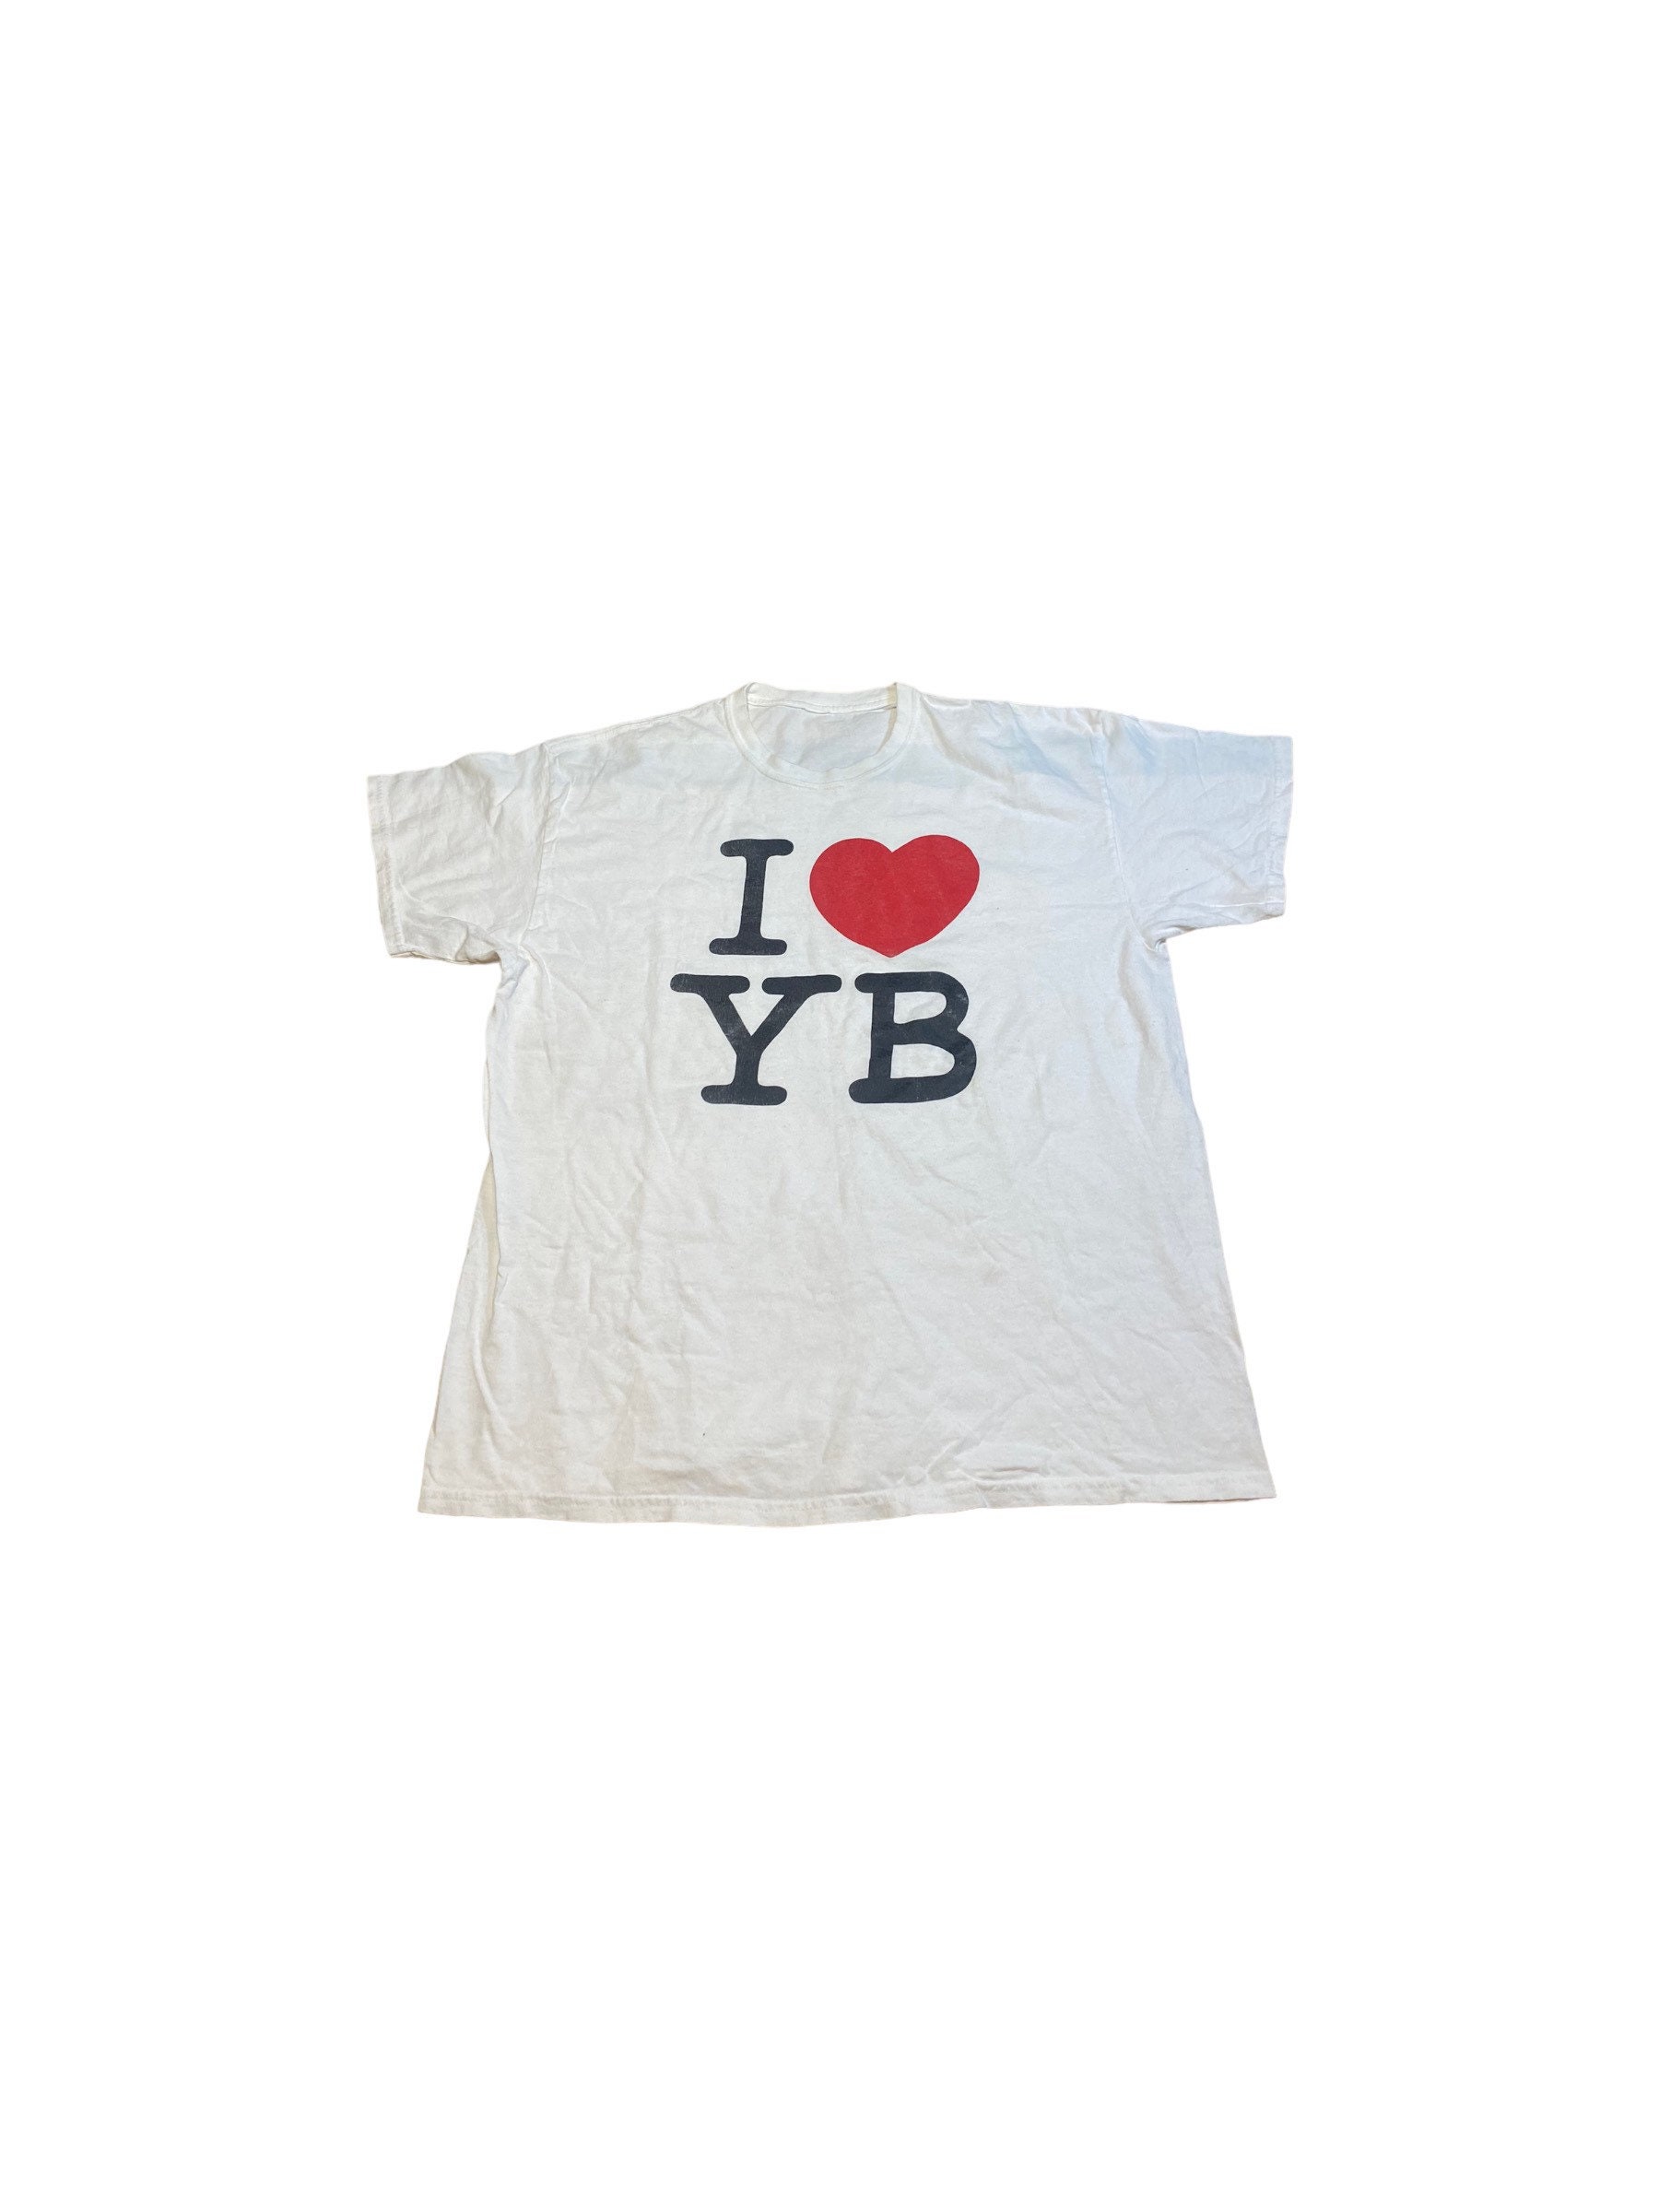 Vintage Y2K NBA Basketball All Over Print Logo T Shirt Large